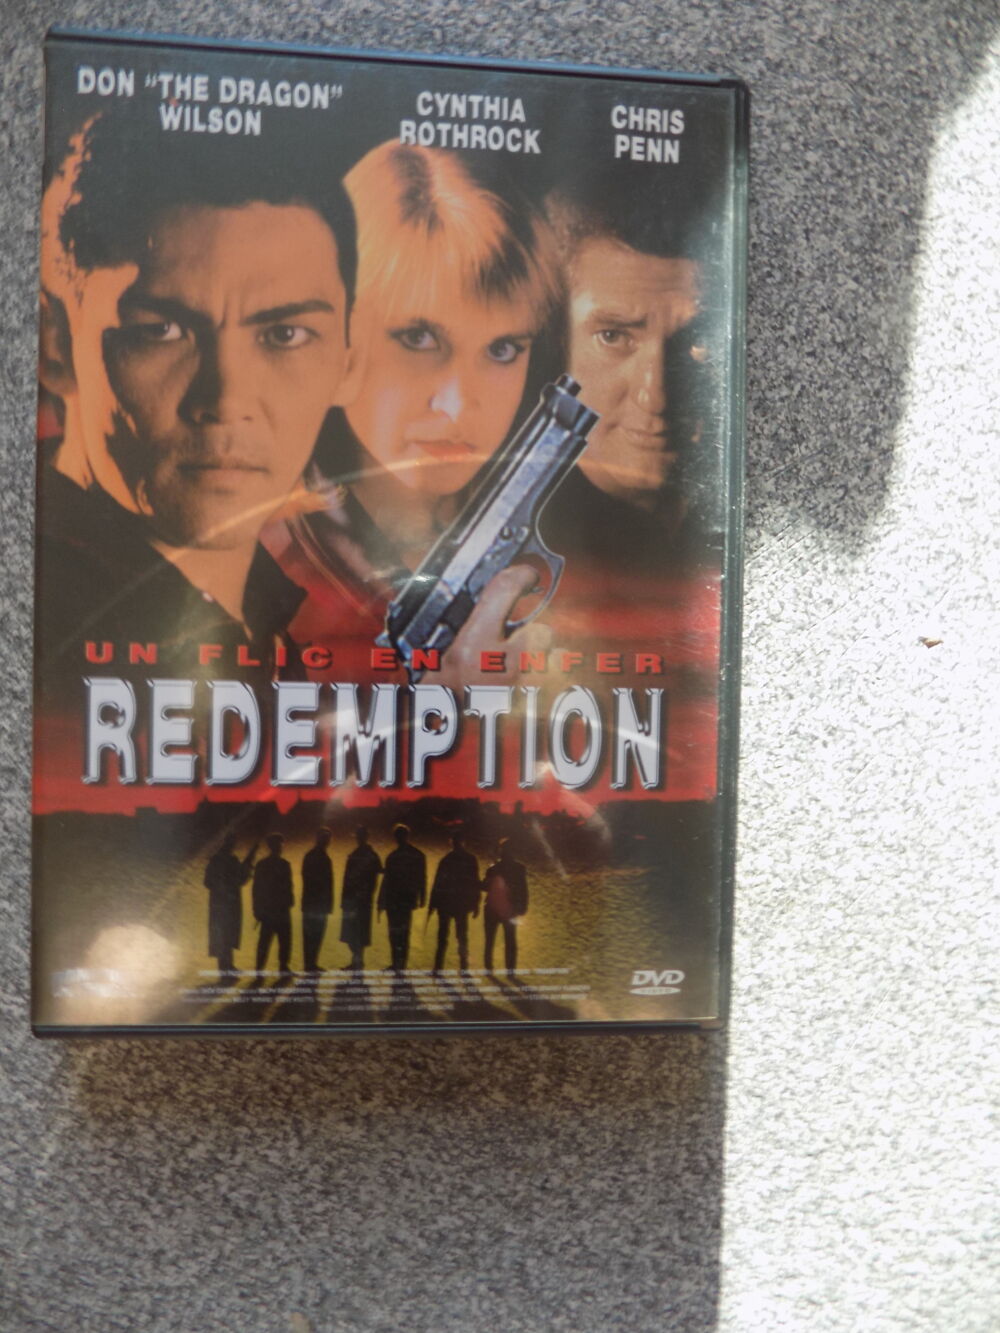 Redemption, un flic en enfer DVD et blu-ray